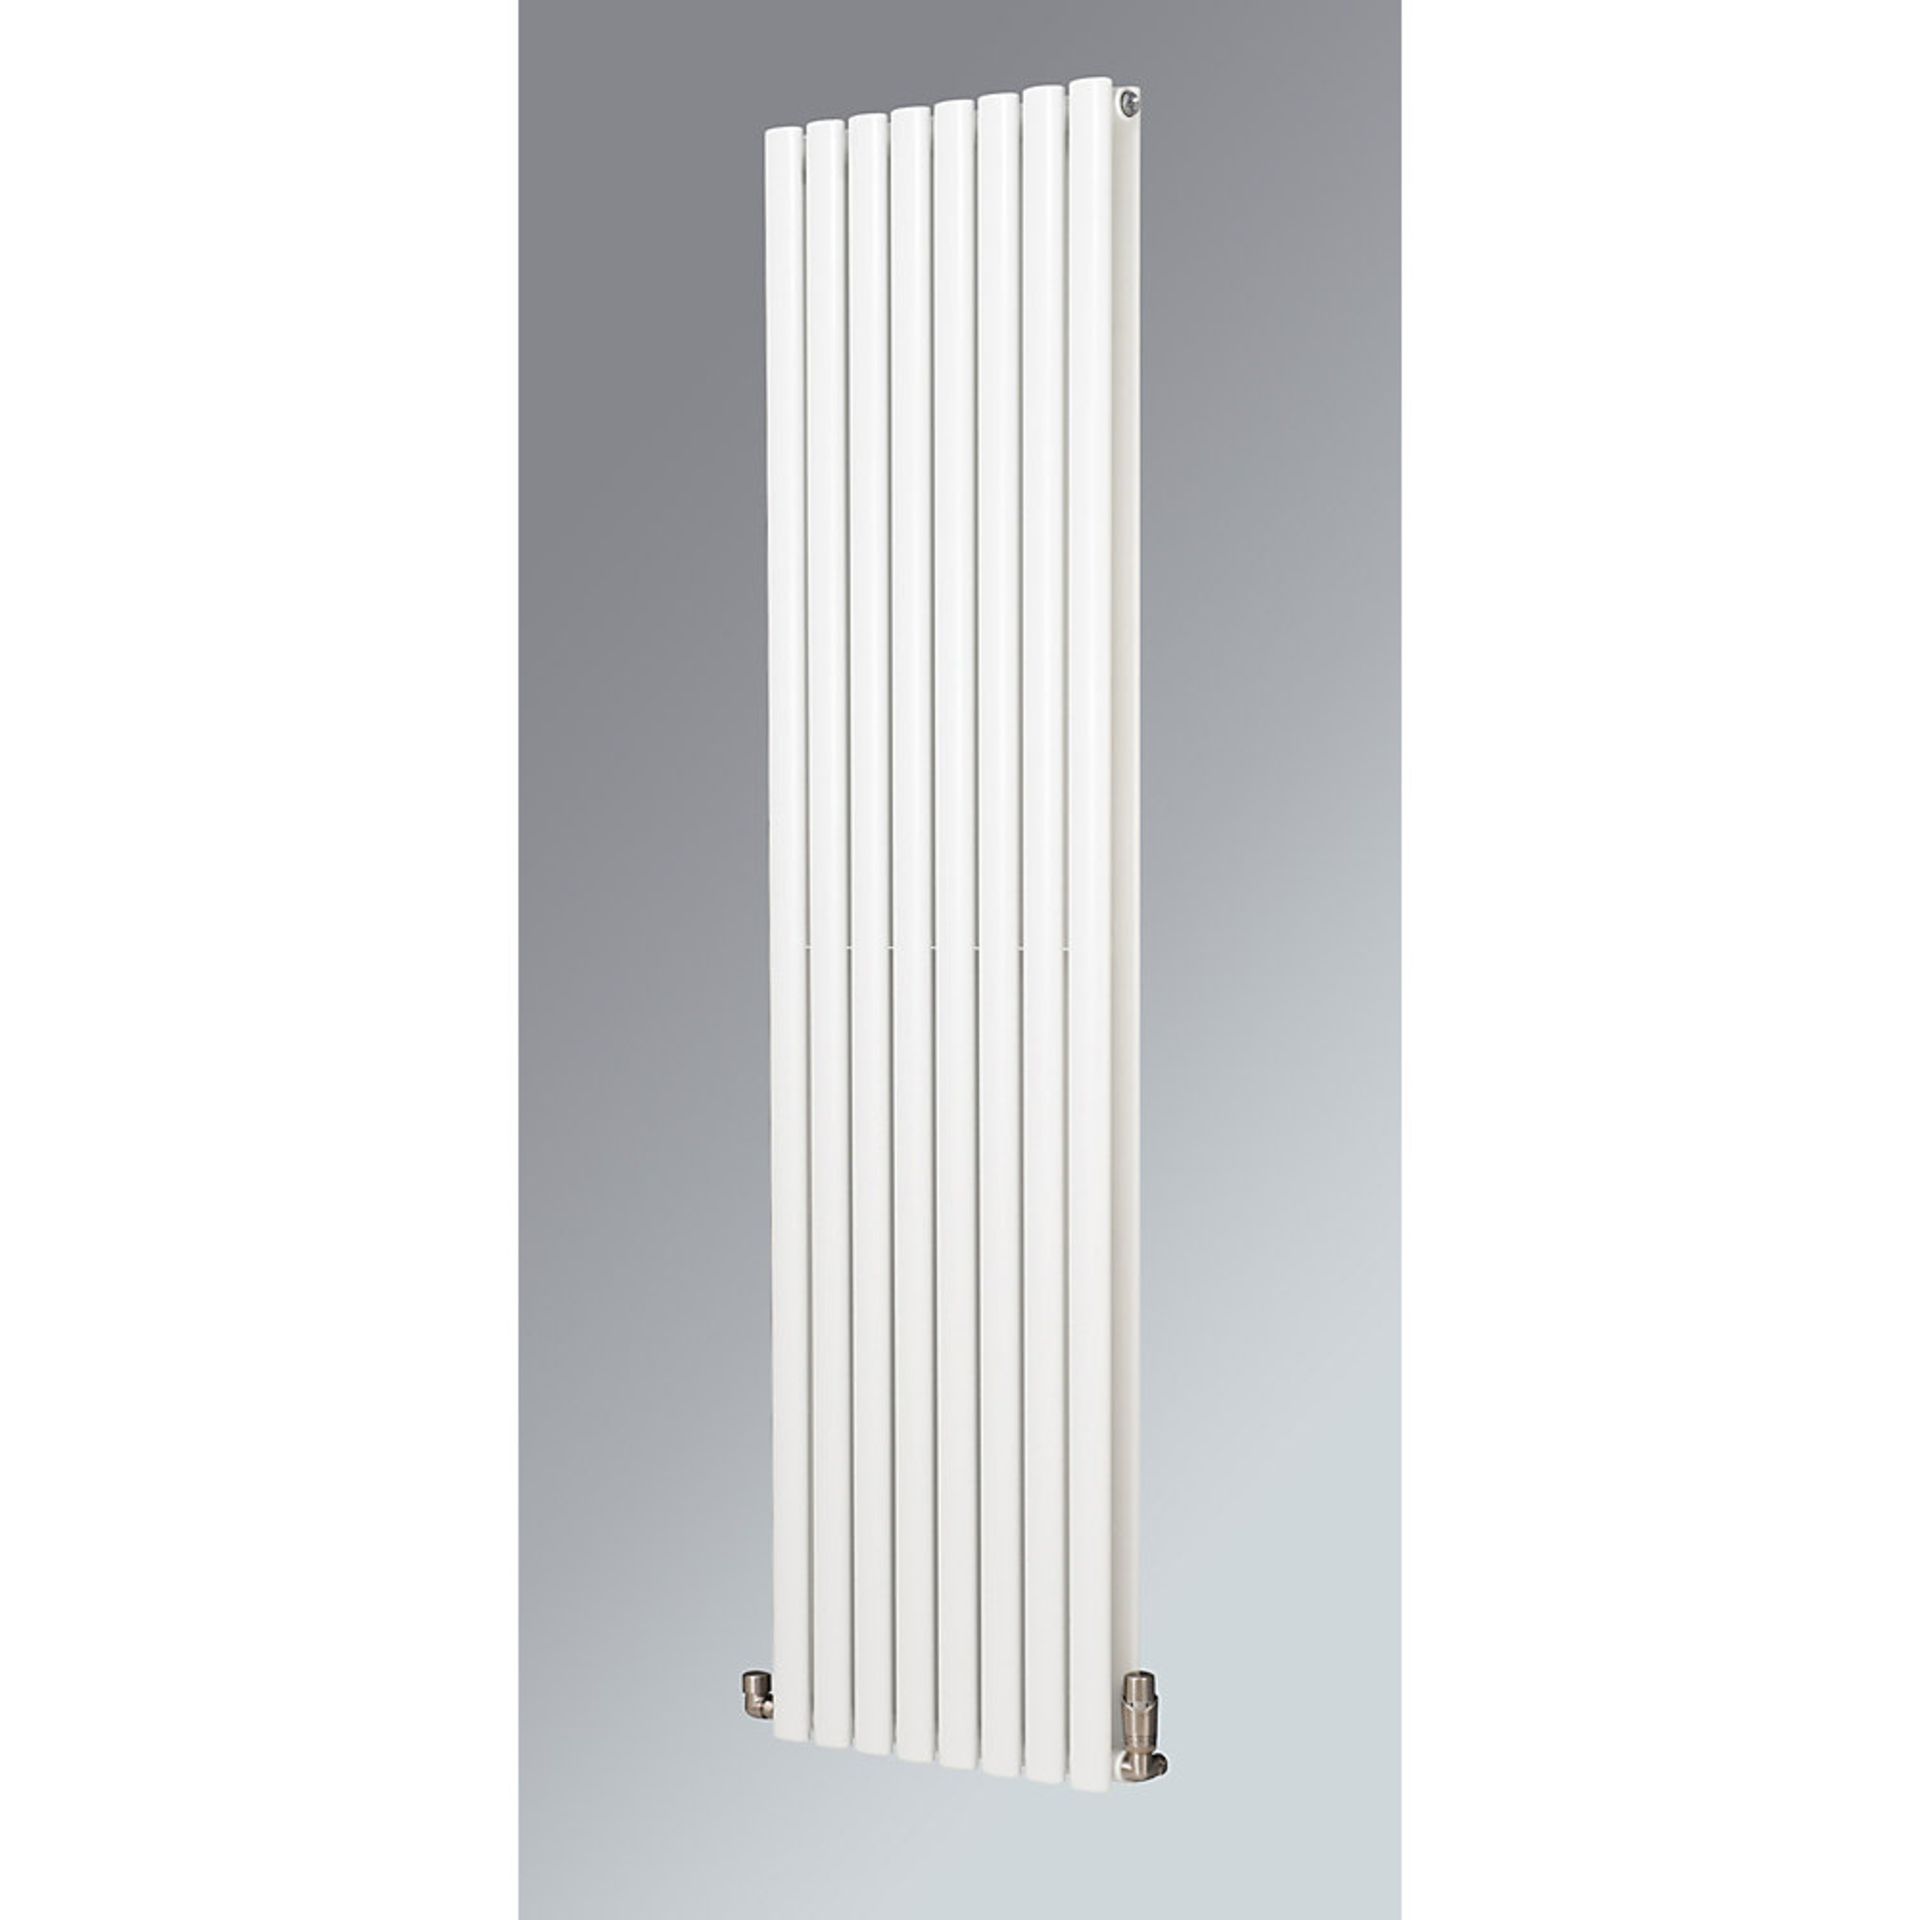 (J24) 1800x236mm Fortuna Duplex Designer Flat Panel Radiator White. Fortuna vertical radiators ... - Image 2 of 2